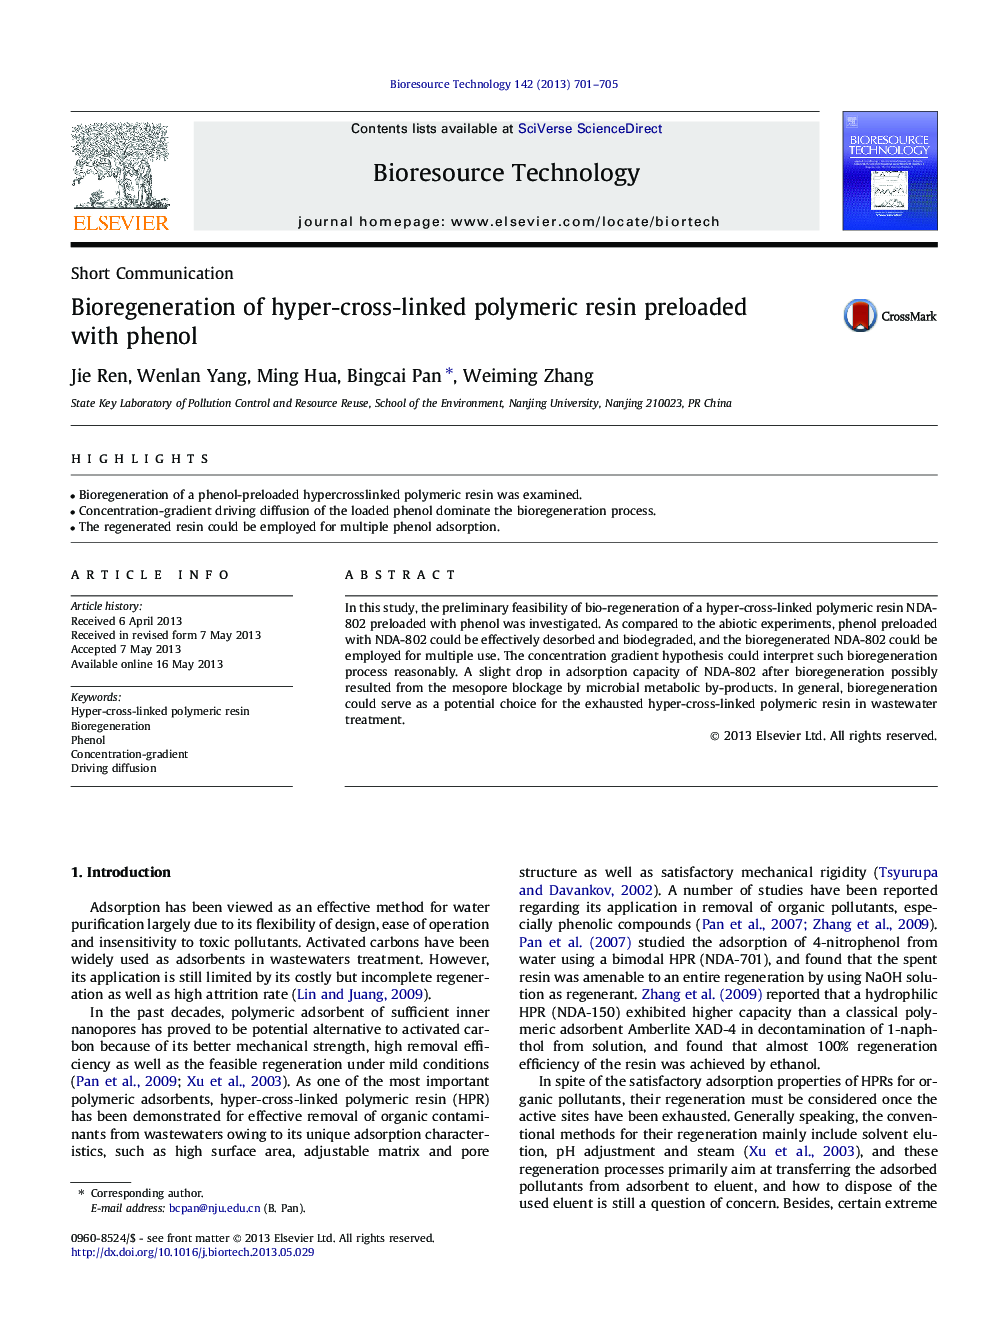 Bioregeneration of hyper-cross-linked polymeric resin preloaded with phenol